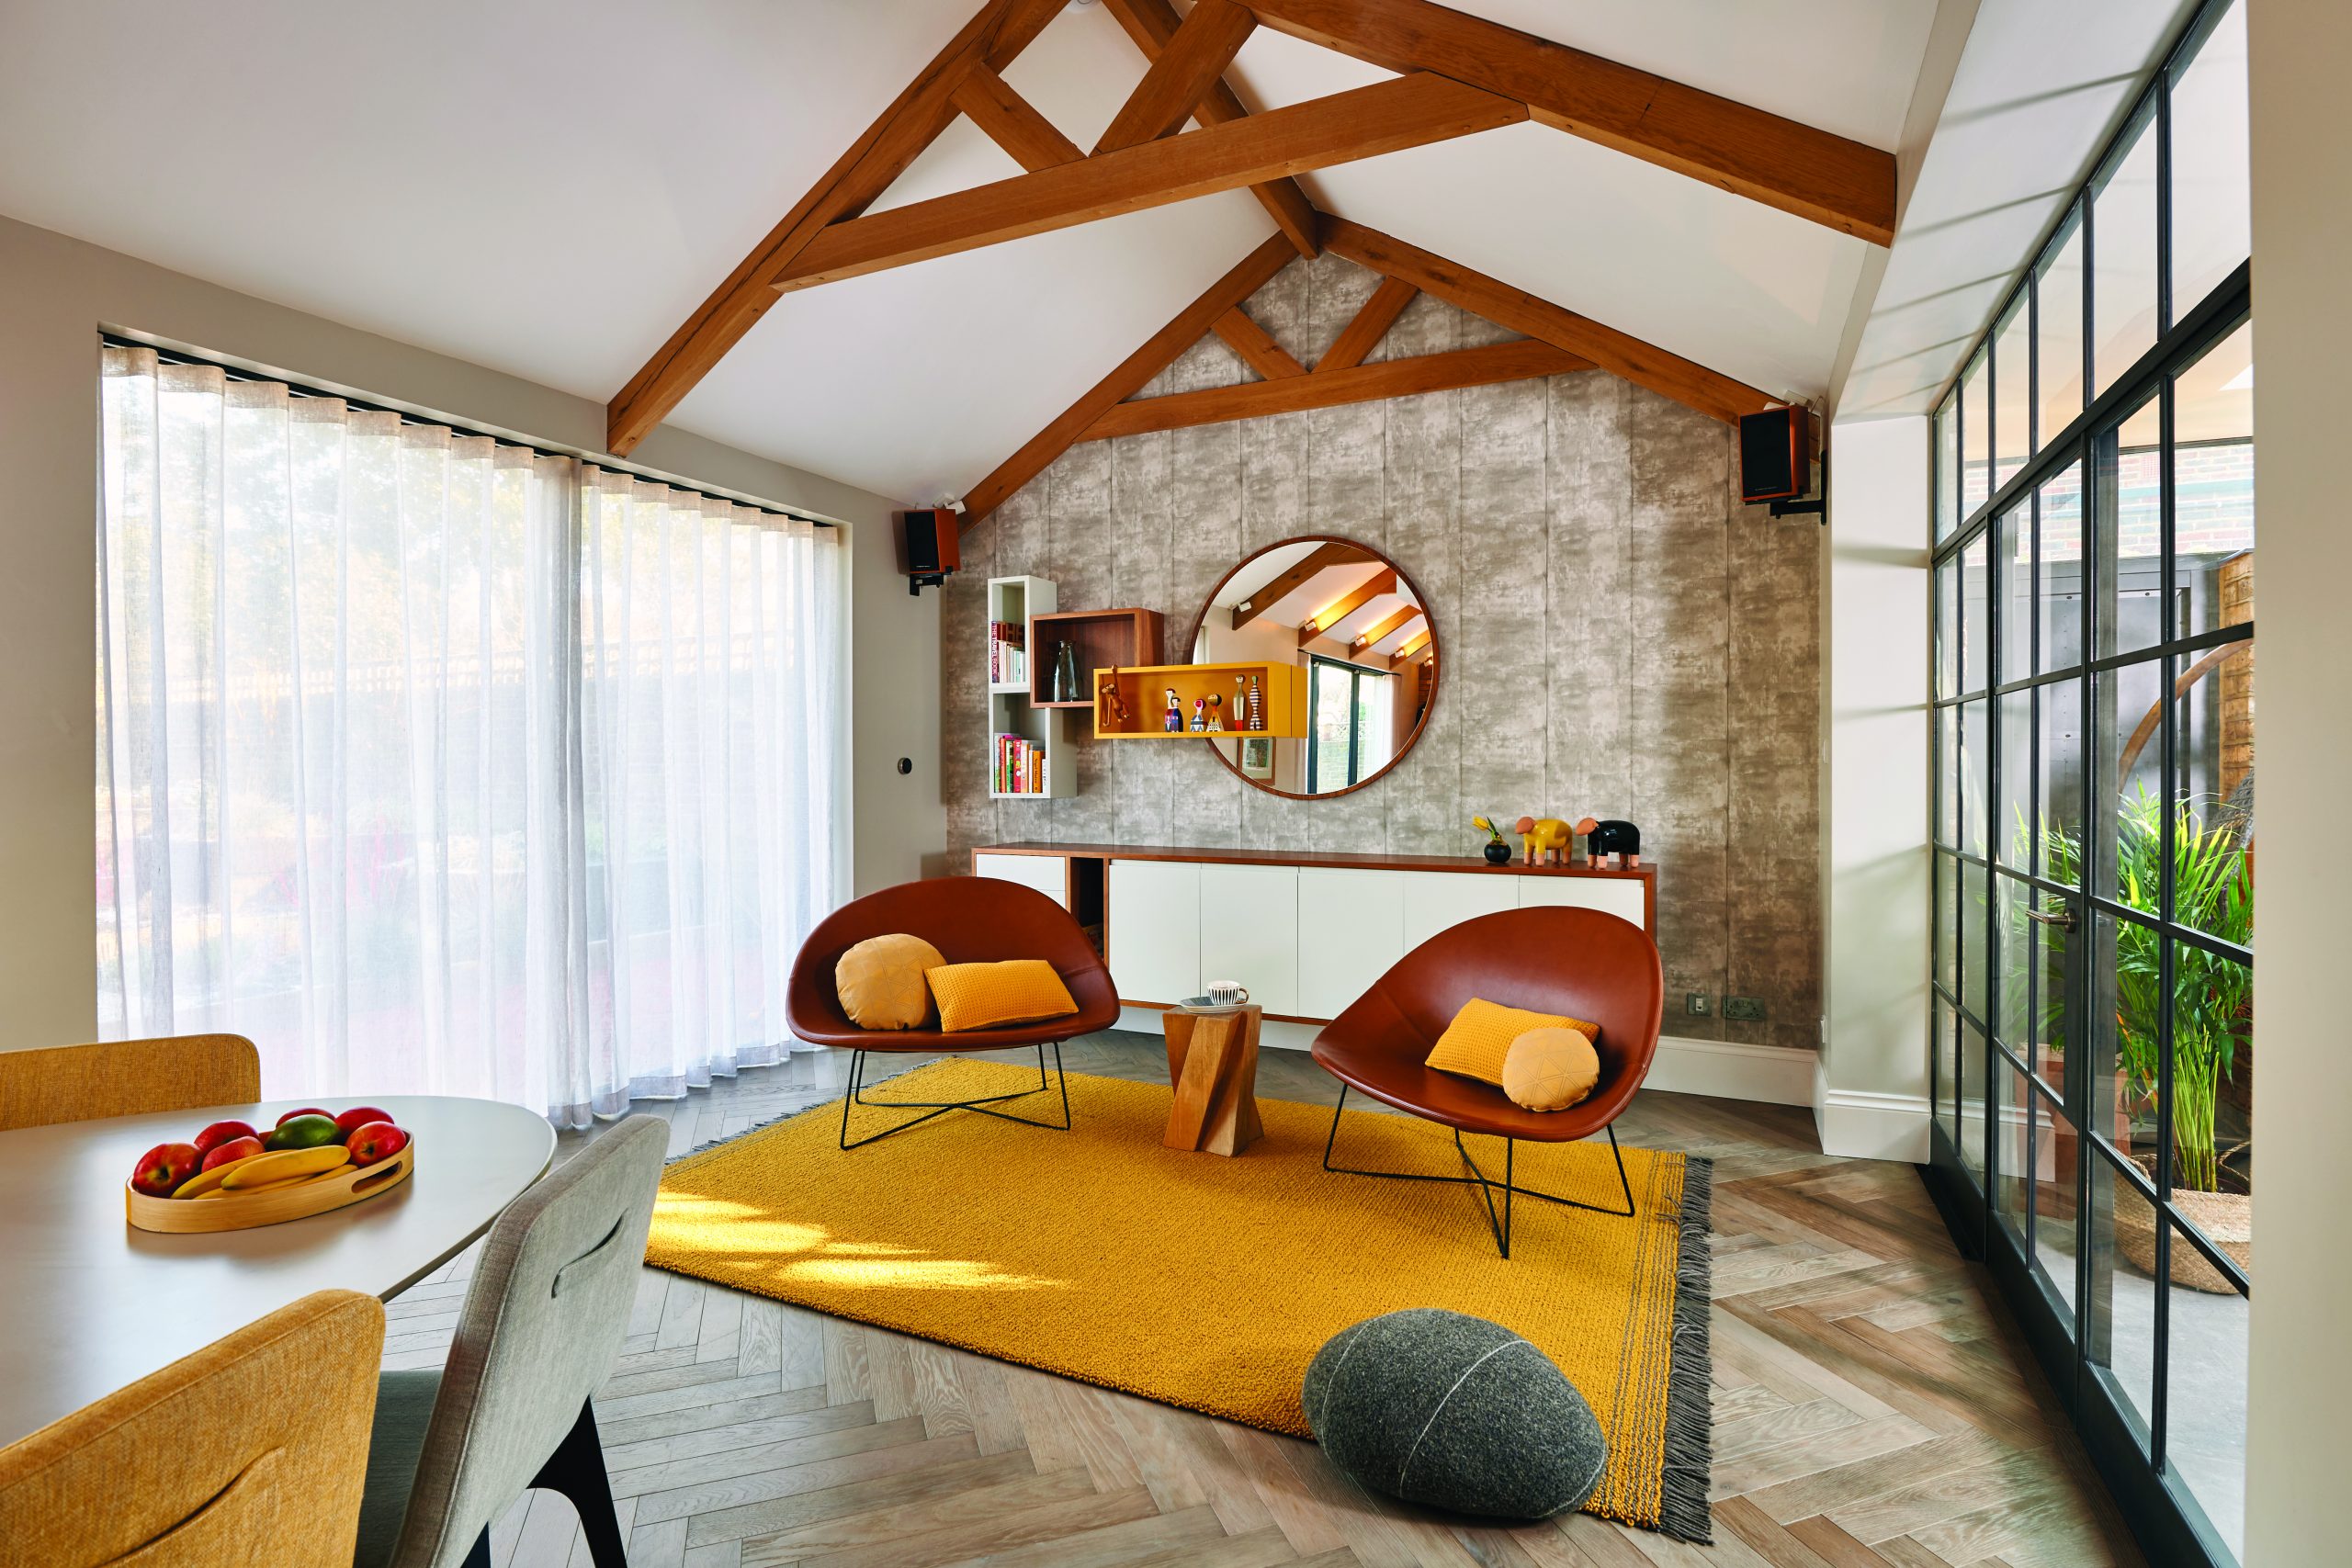 A living room design by designer Mia Karlsson